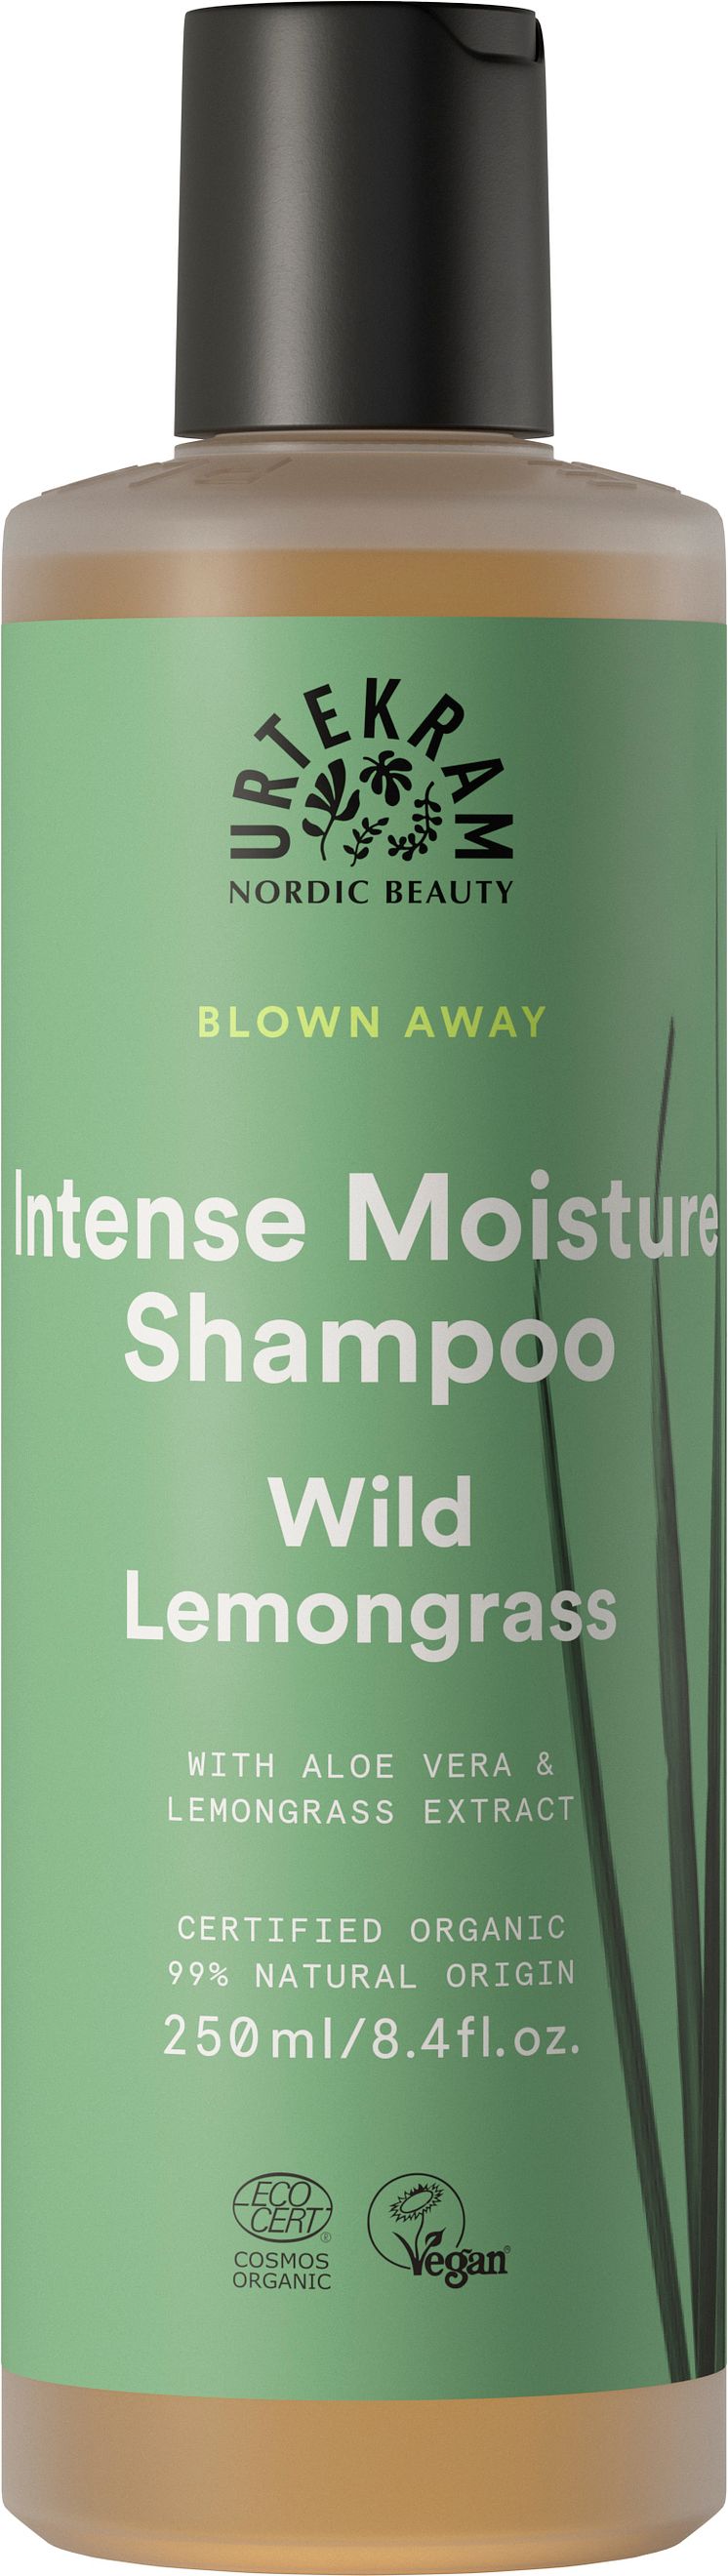 BLOWN AWAY Shampoo